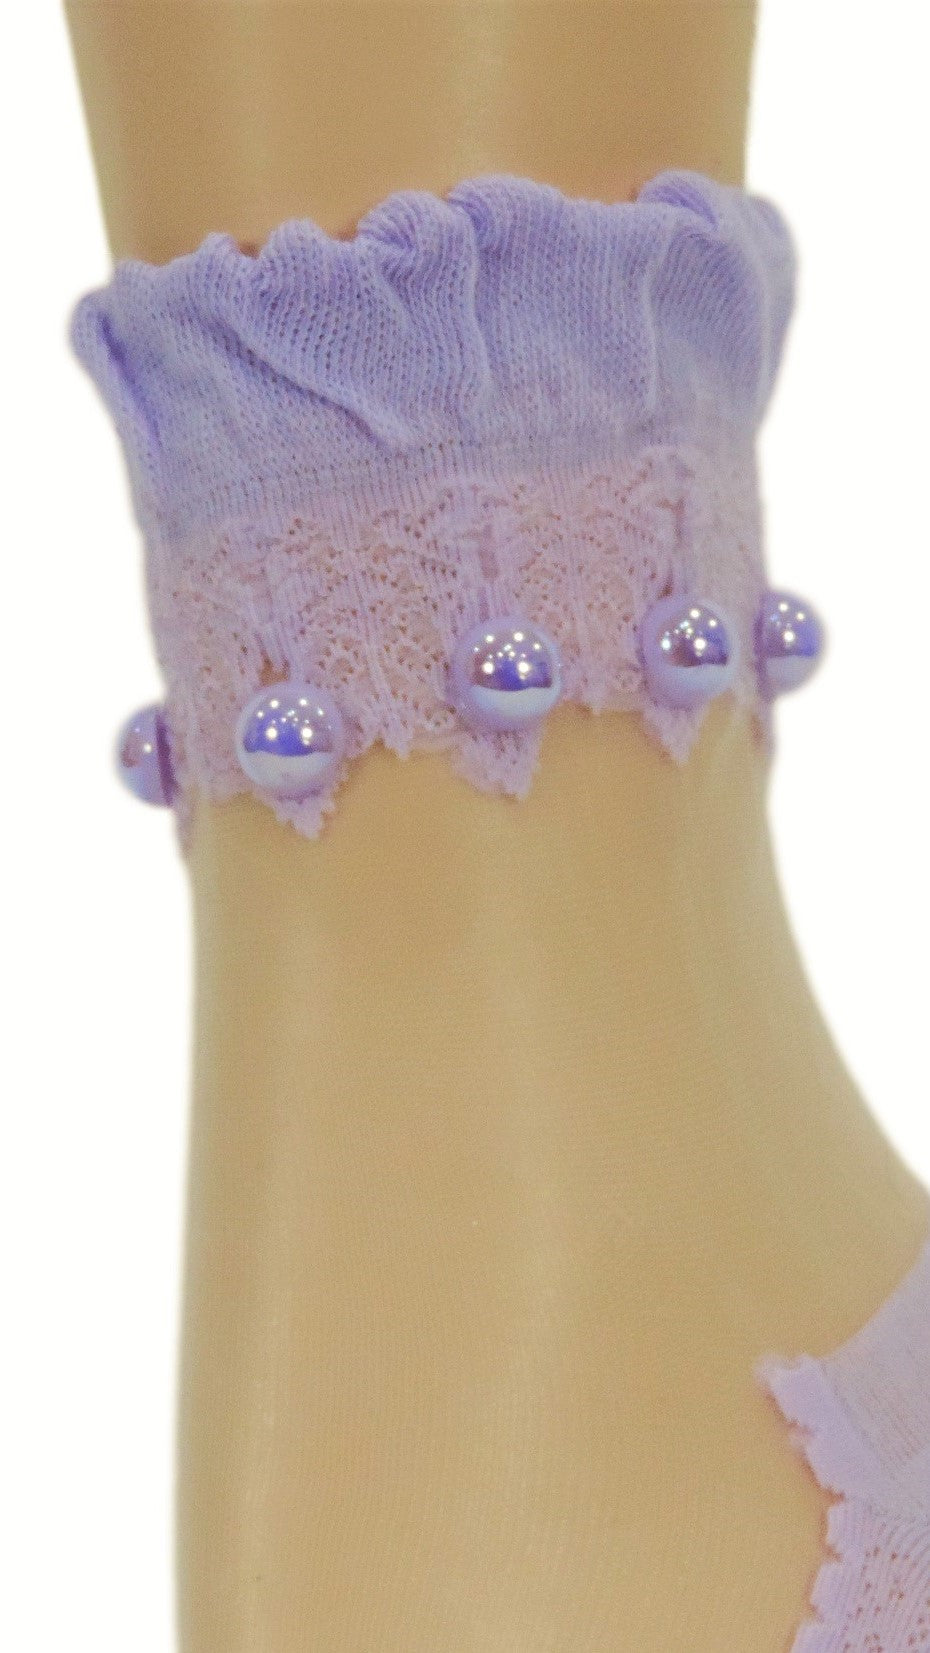 Elegant Purple Custom Sheer Socks with beads - Global Trendz Fashion®